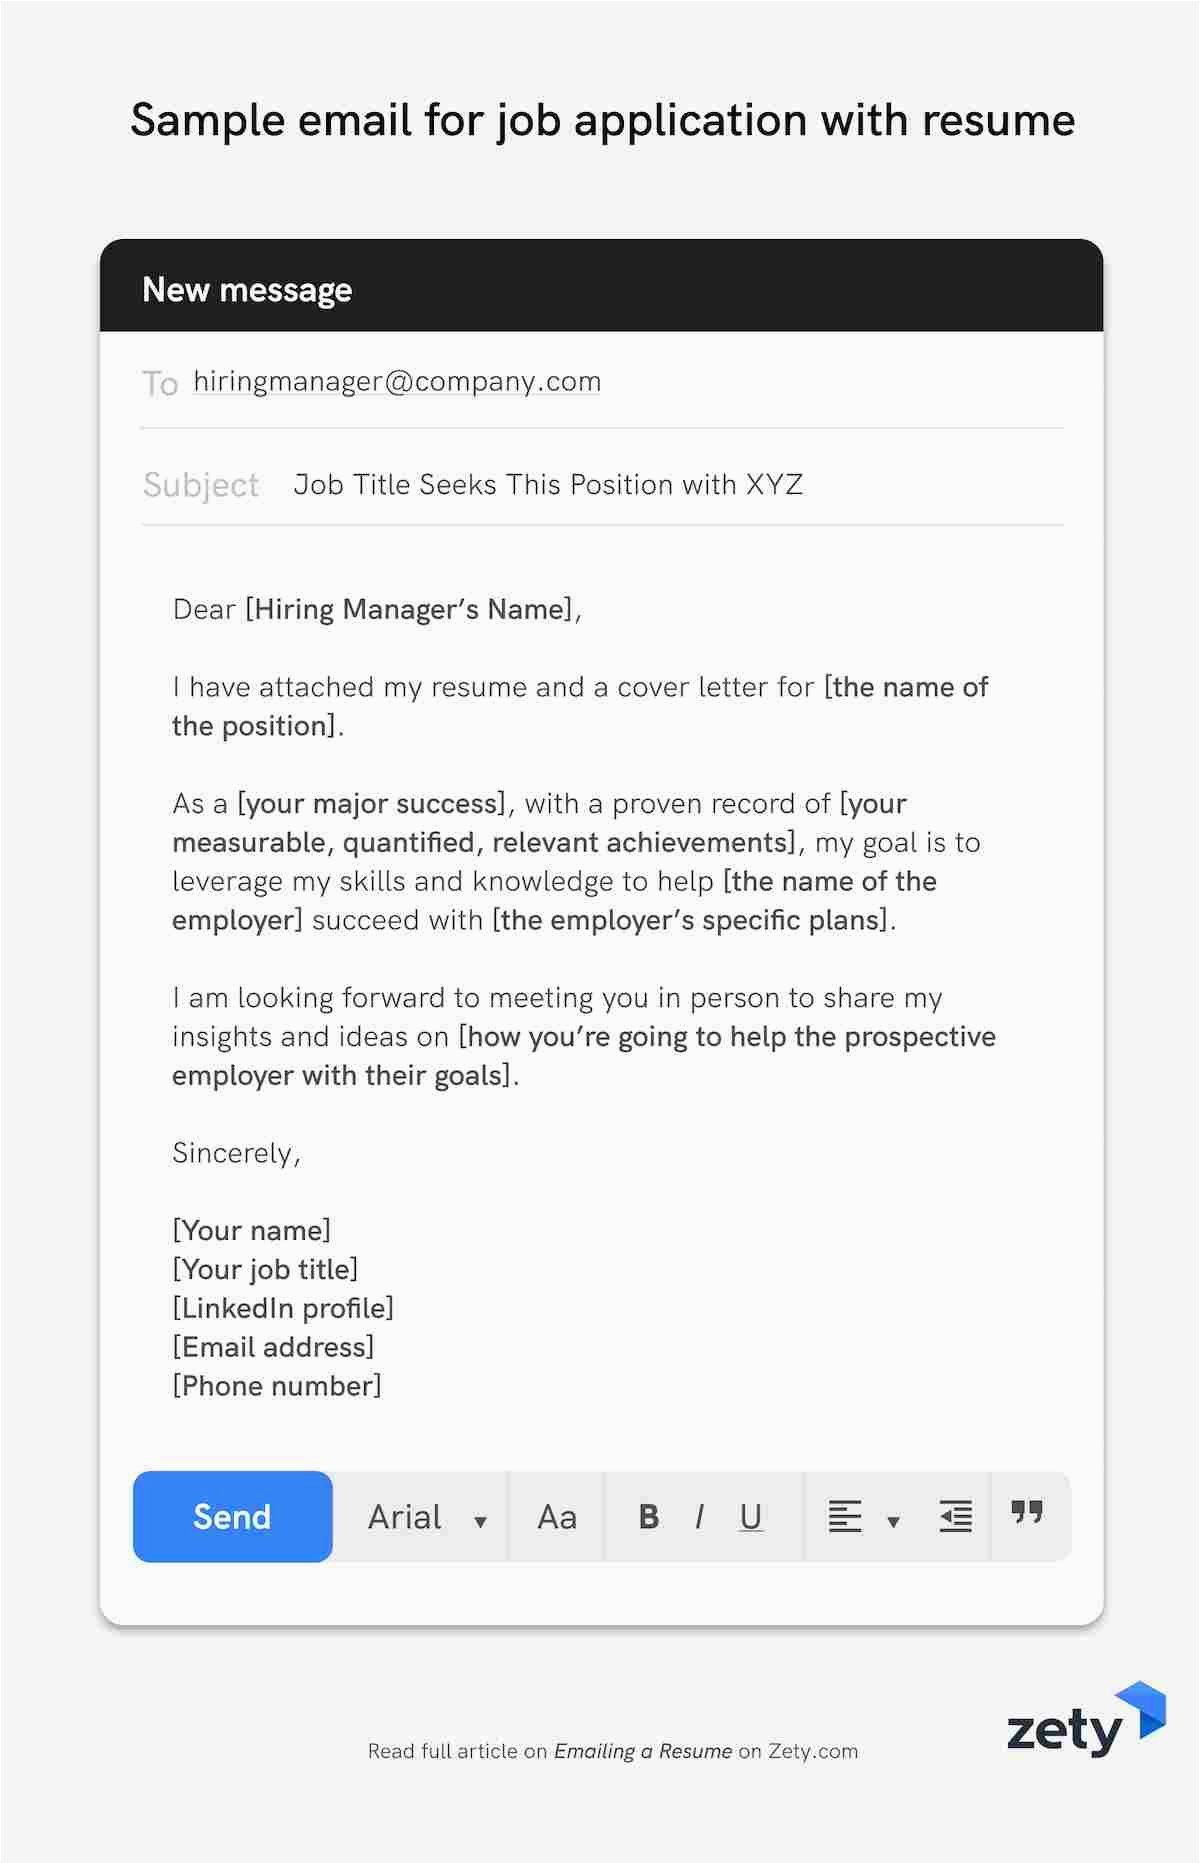 Sample Email for Sending Resume for Job Emailing A Resume 12 Job Application Email Samples